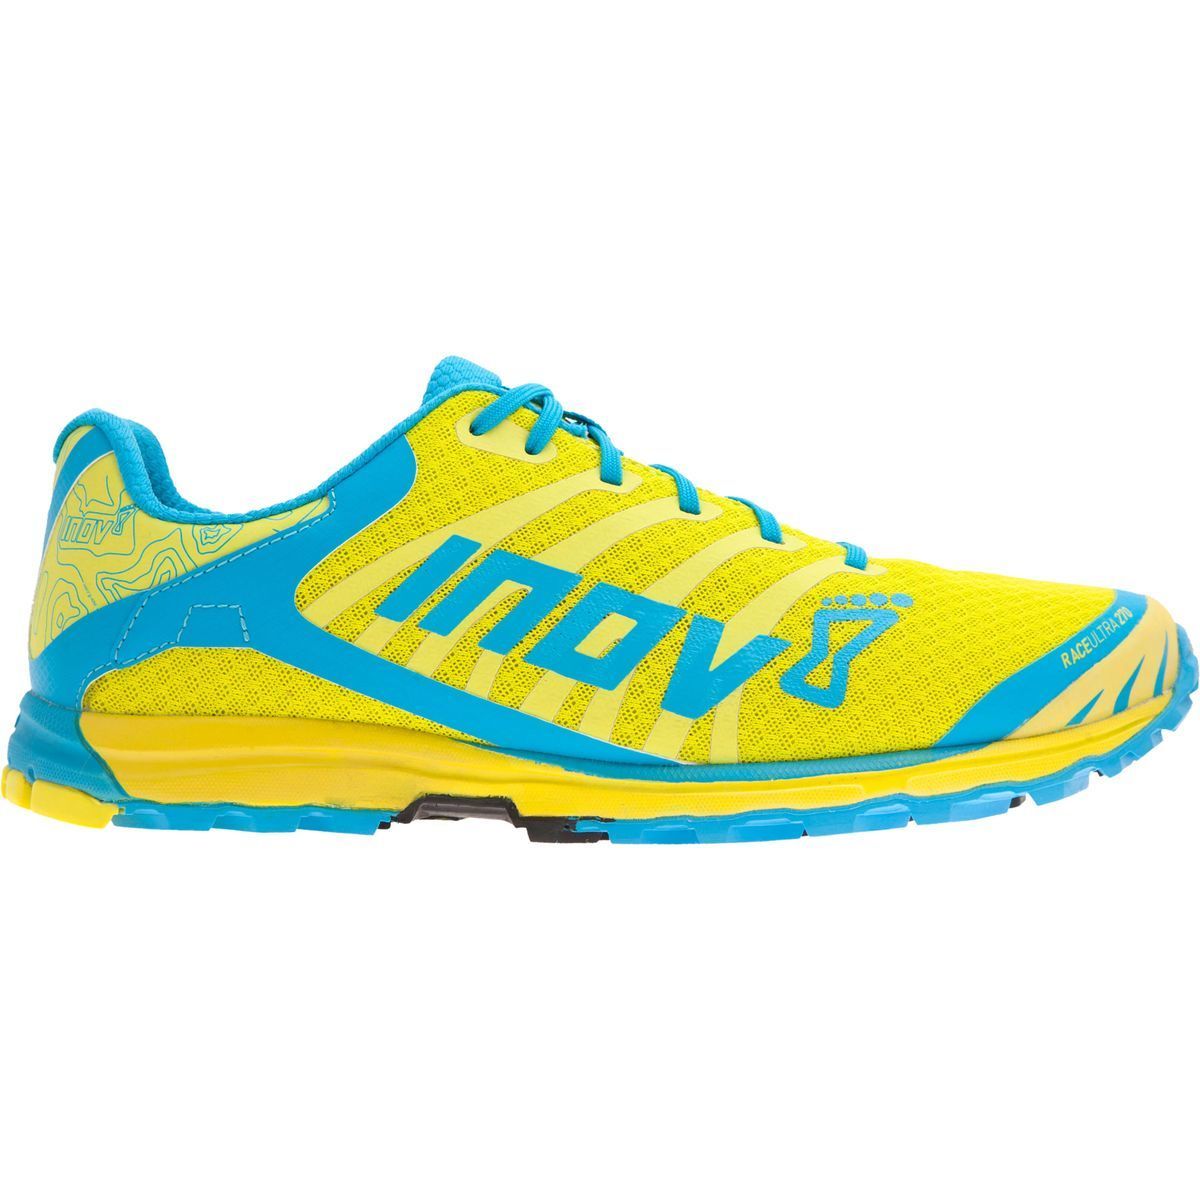 Inov 8 Race Ultra 270 Running Shoe Men's